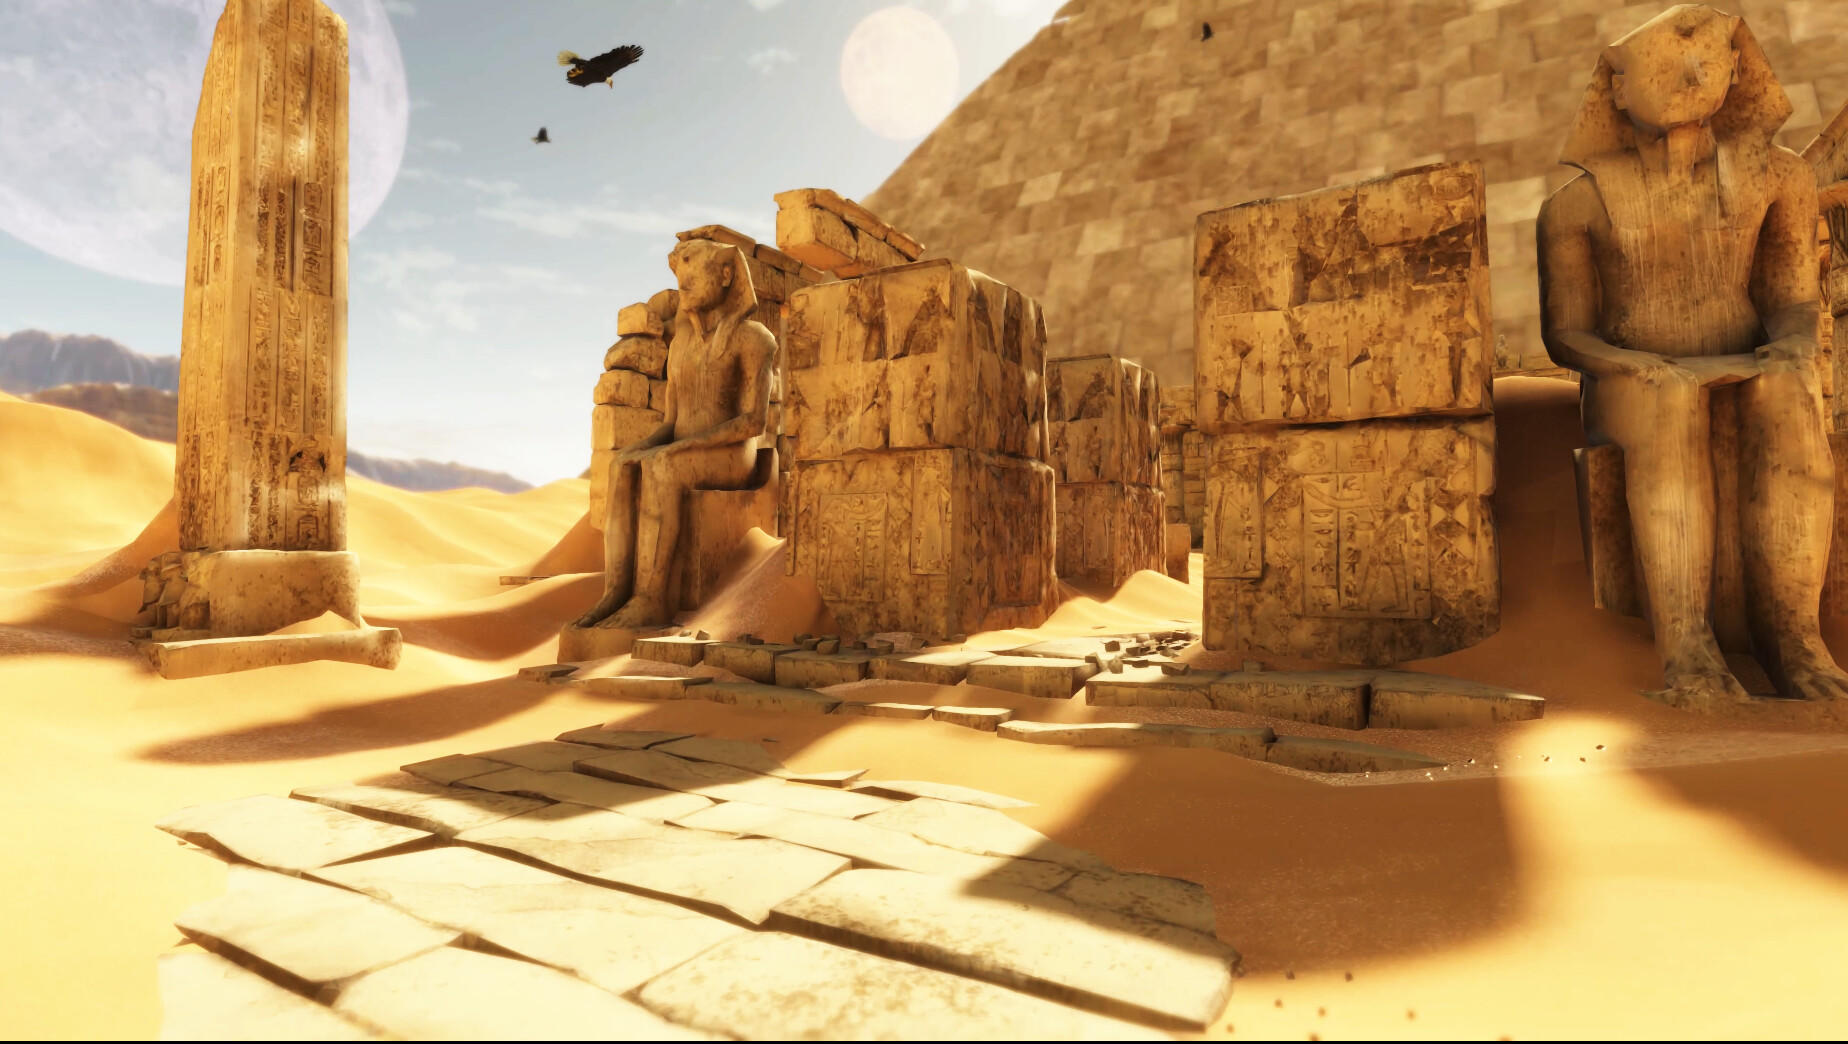 Screenshot 1 of Piramid rahsia VR 